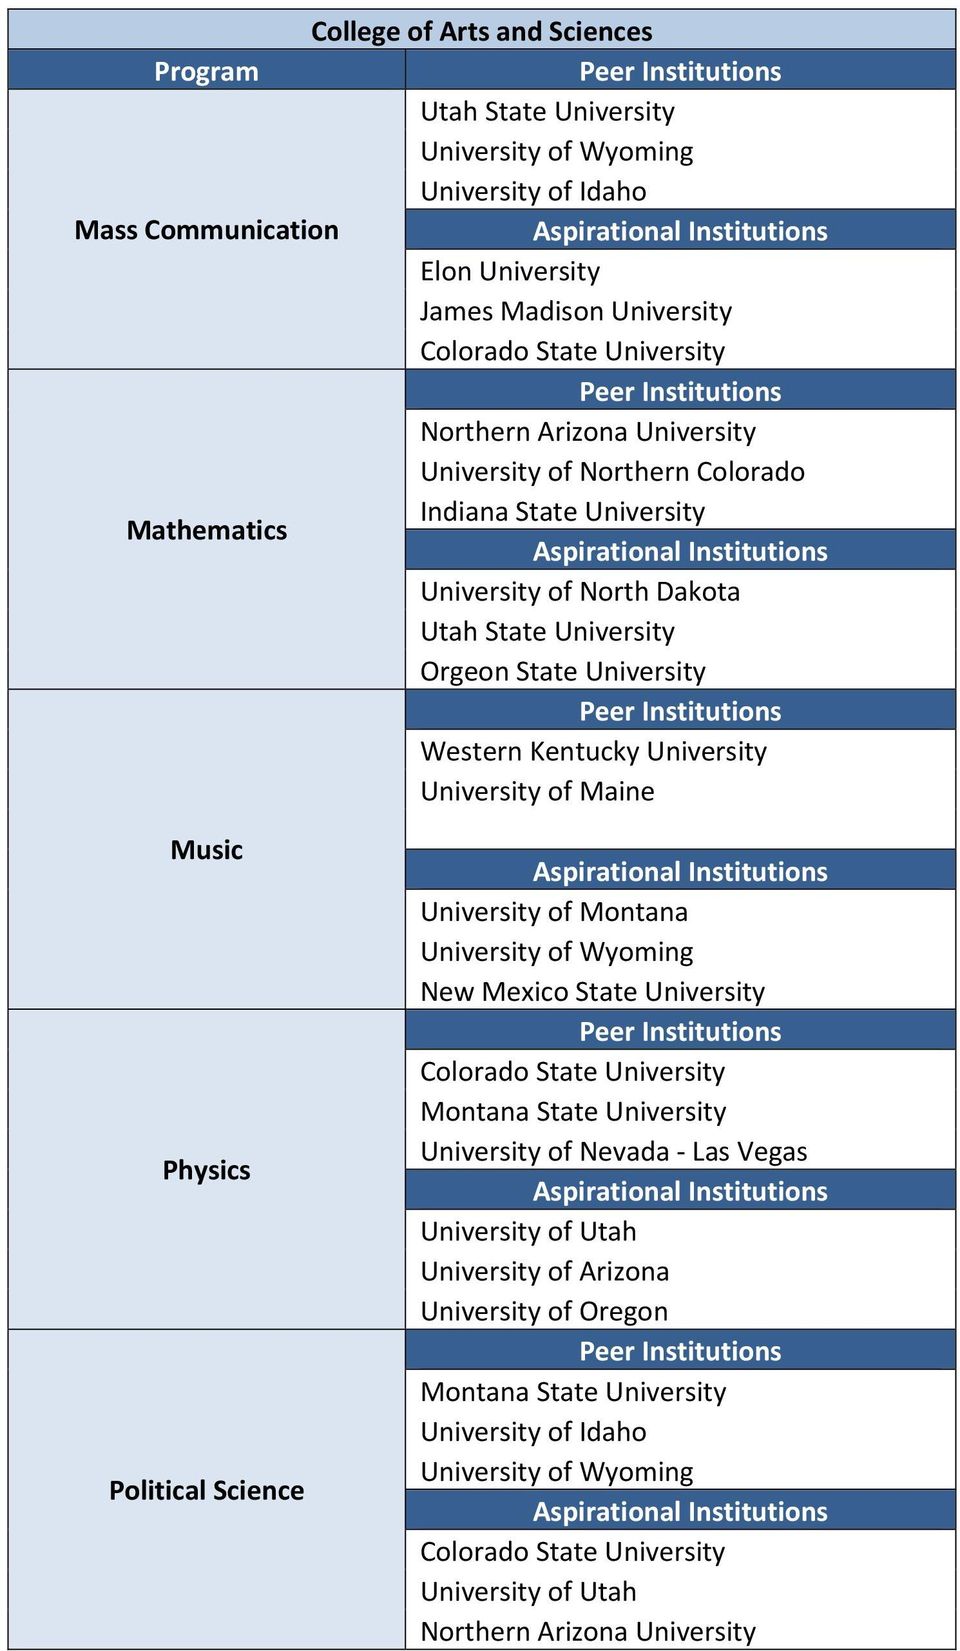 Kentucky University University of Maine Music Physics Political Science New Mexico State University Colorado State